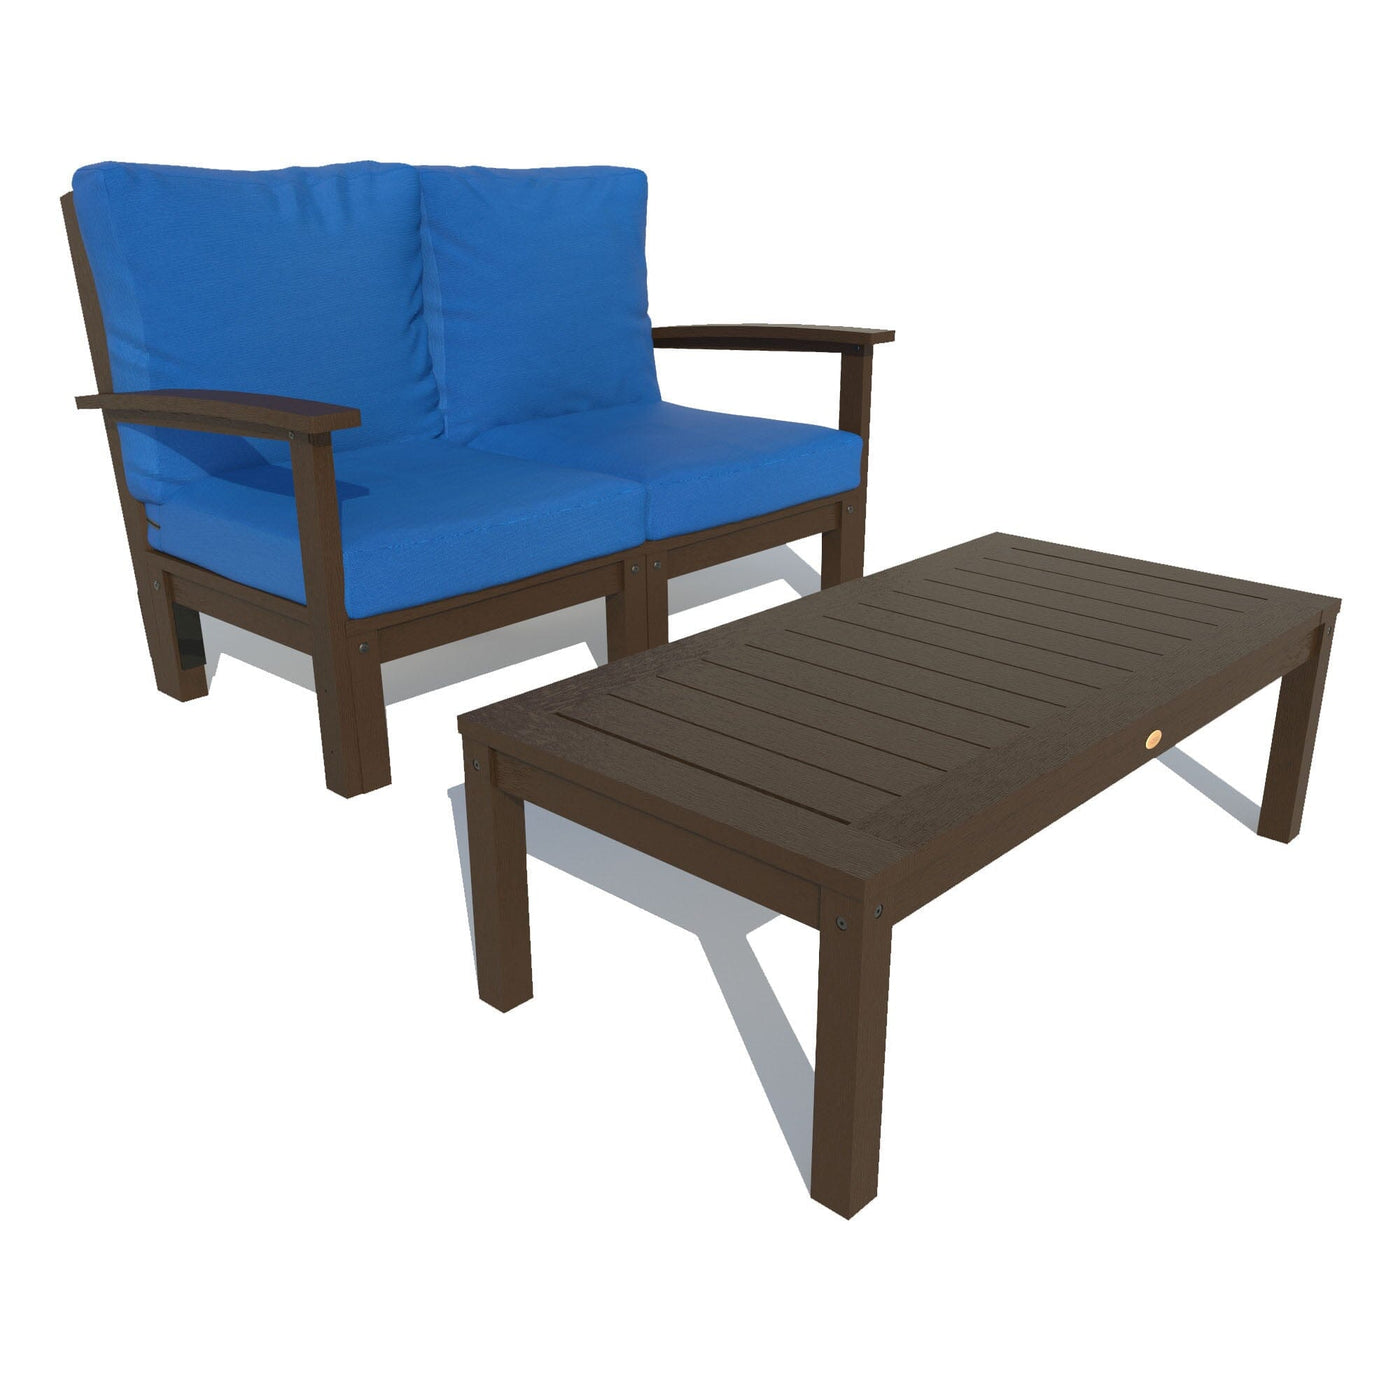 Bespoke Deep Seating: Loveseat and Conversation Table Deep Seating Highwood USA Cobalt Blue Weathered Acorn 